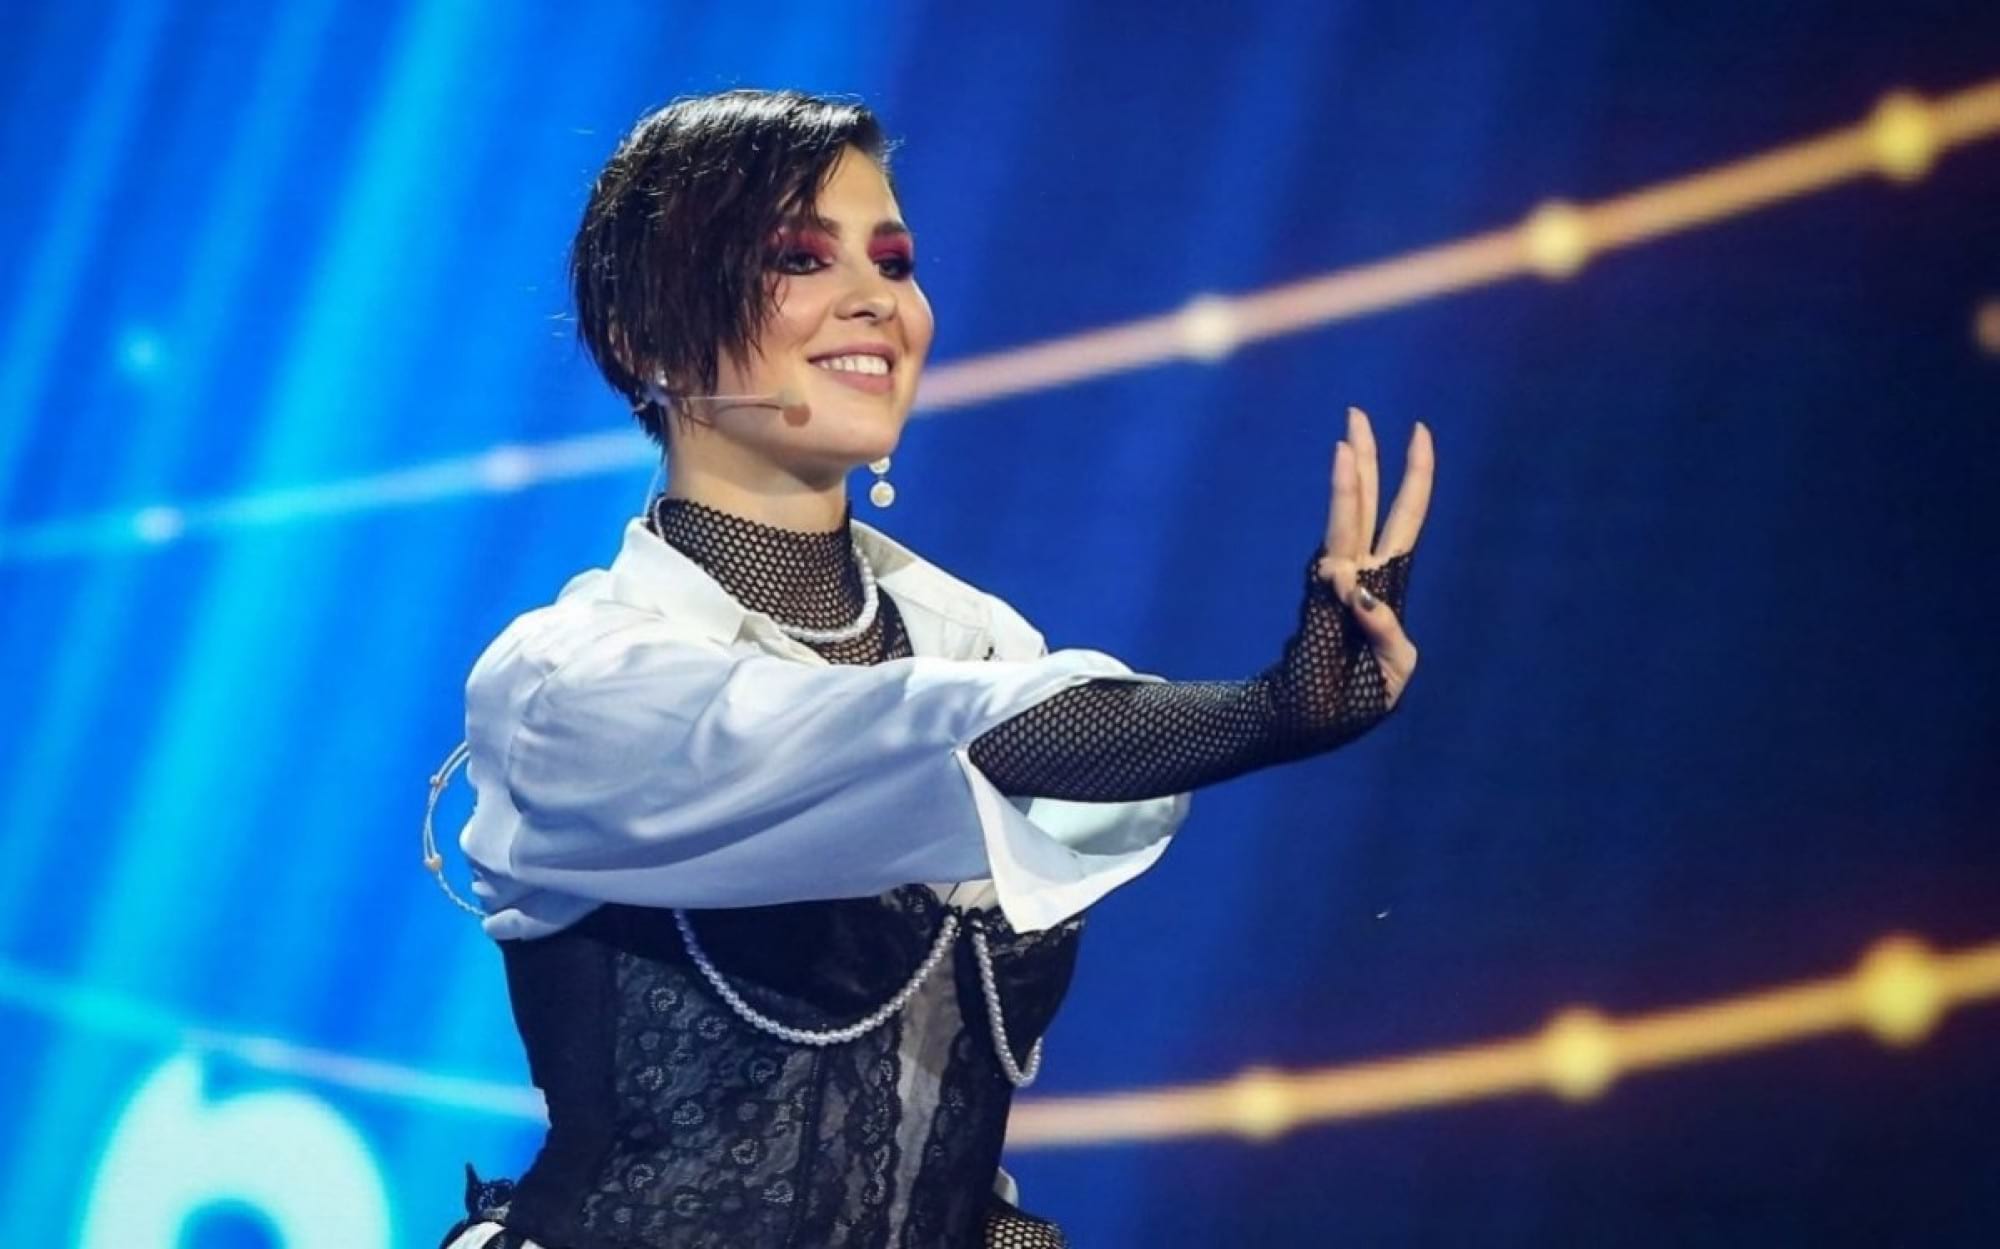 eurovision 2020 ukraine